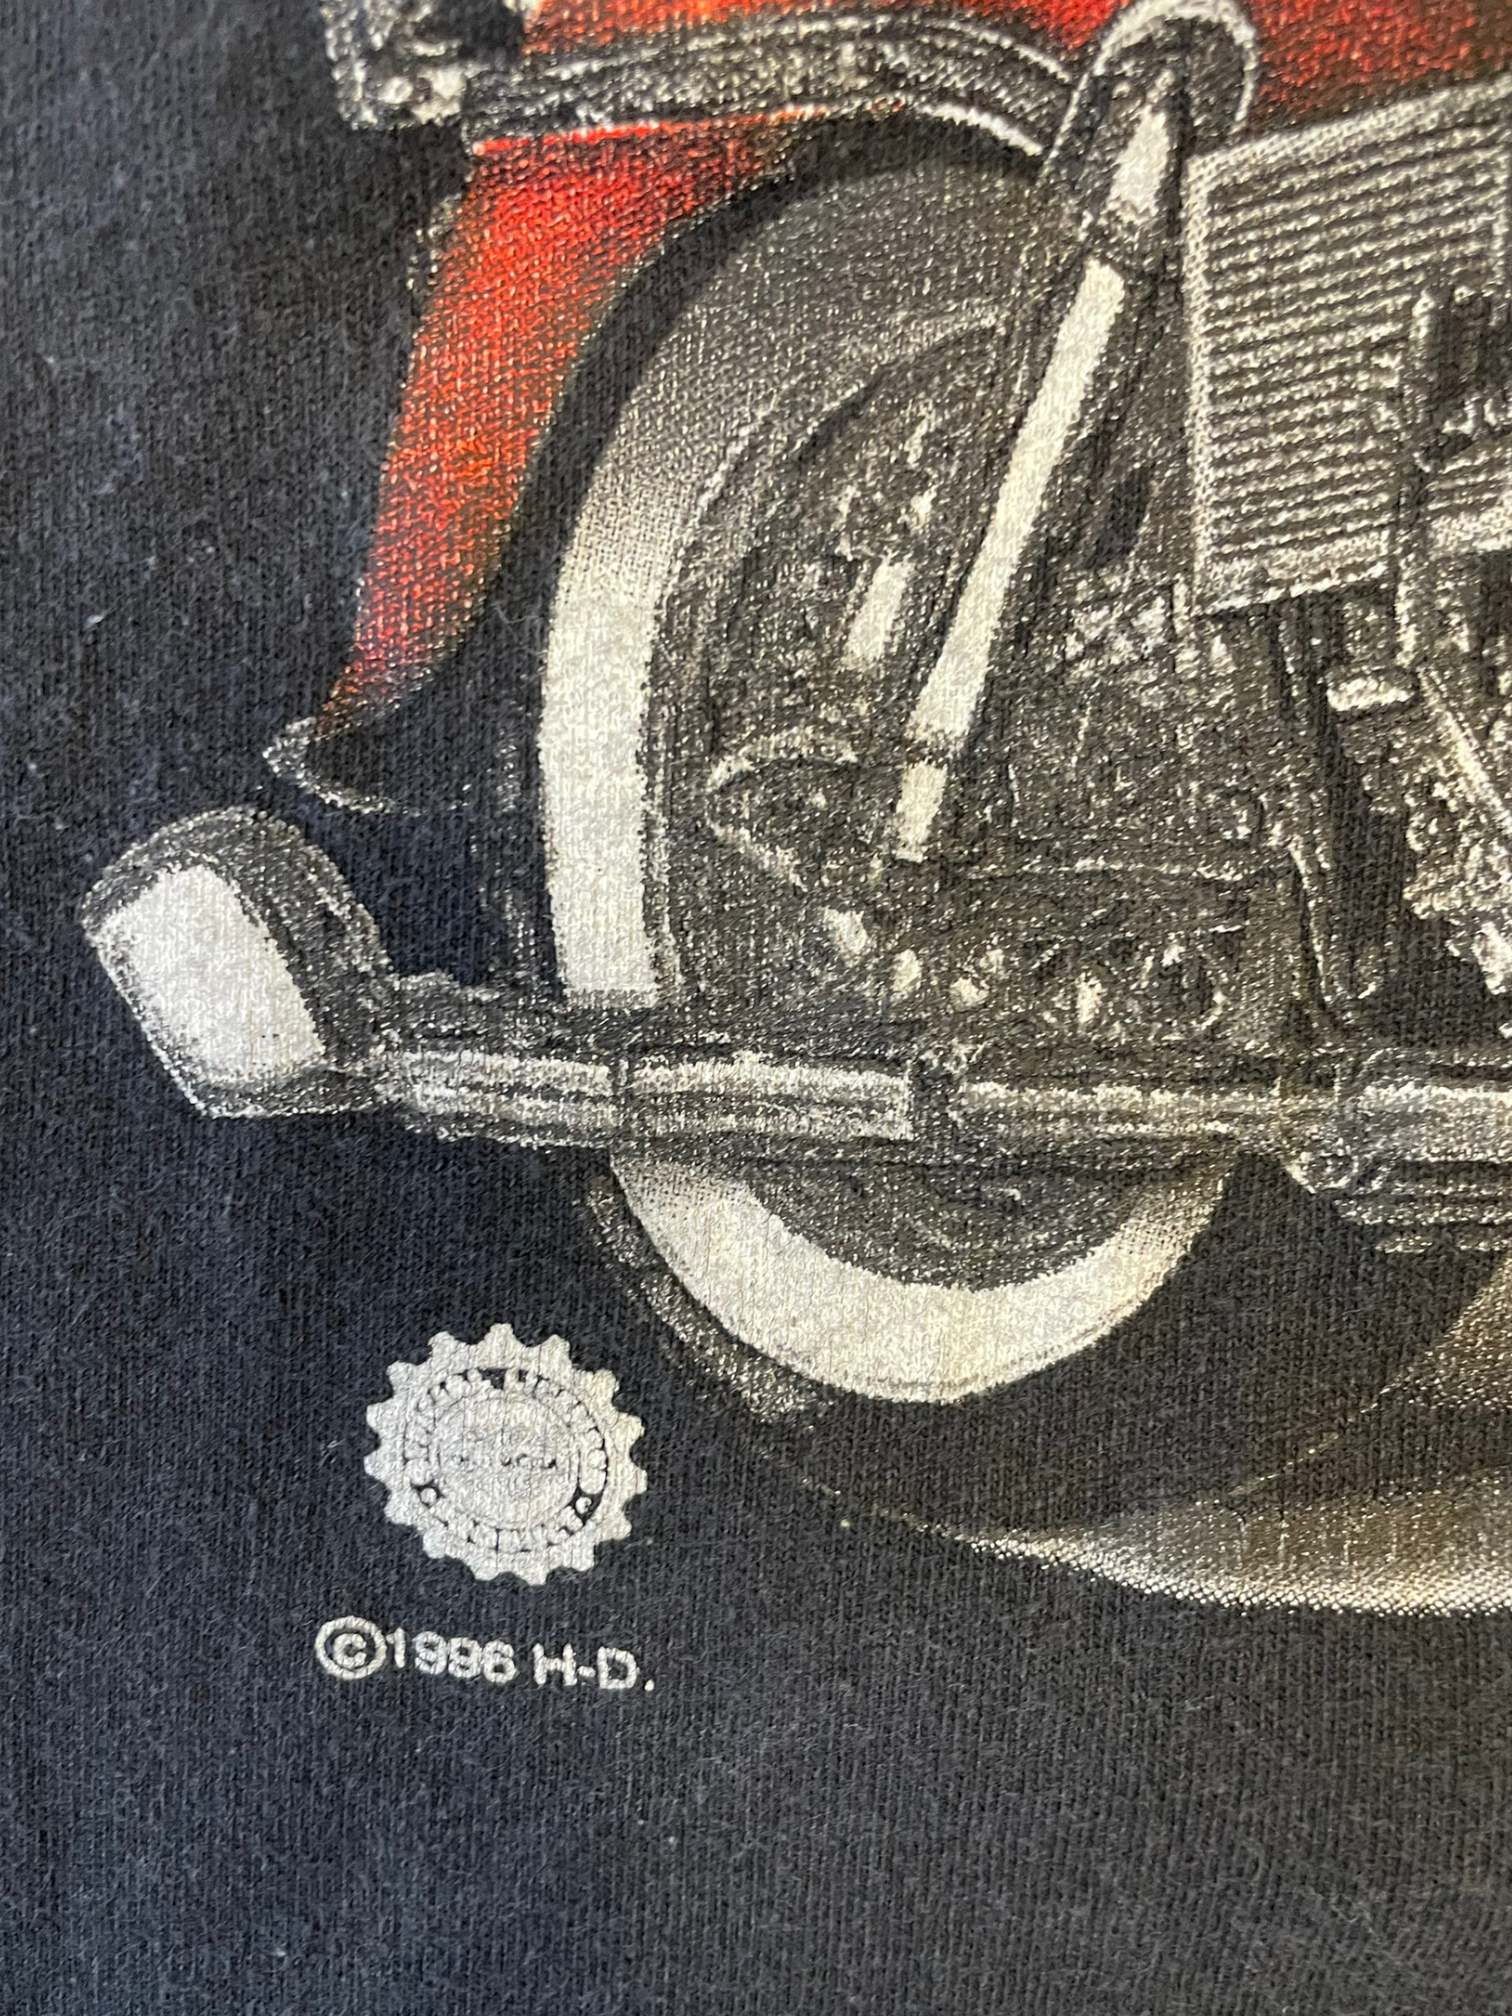 1996 Harley Davidson Graphic T-Shirt - Large